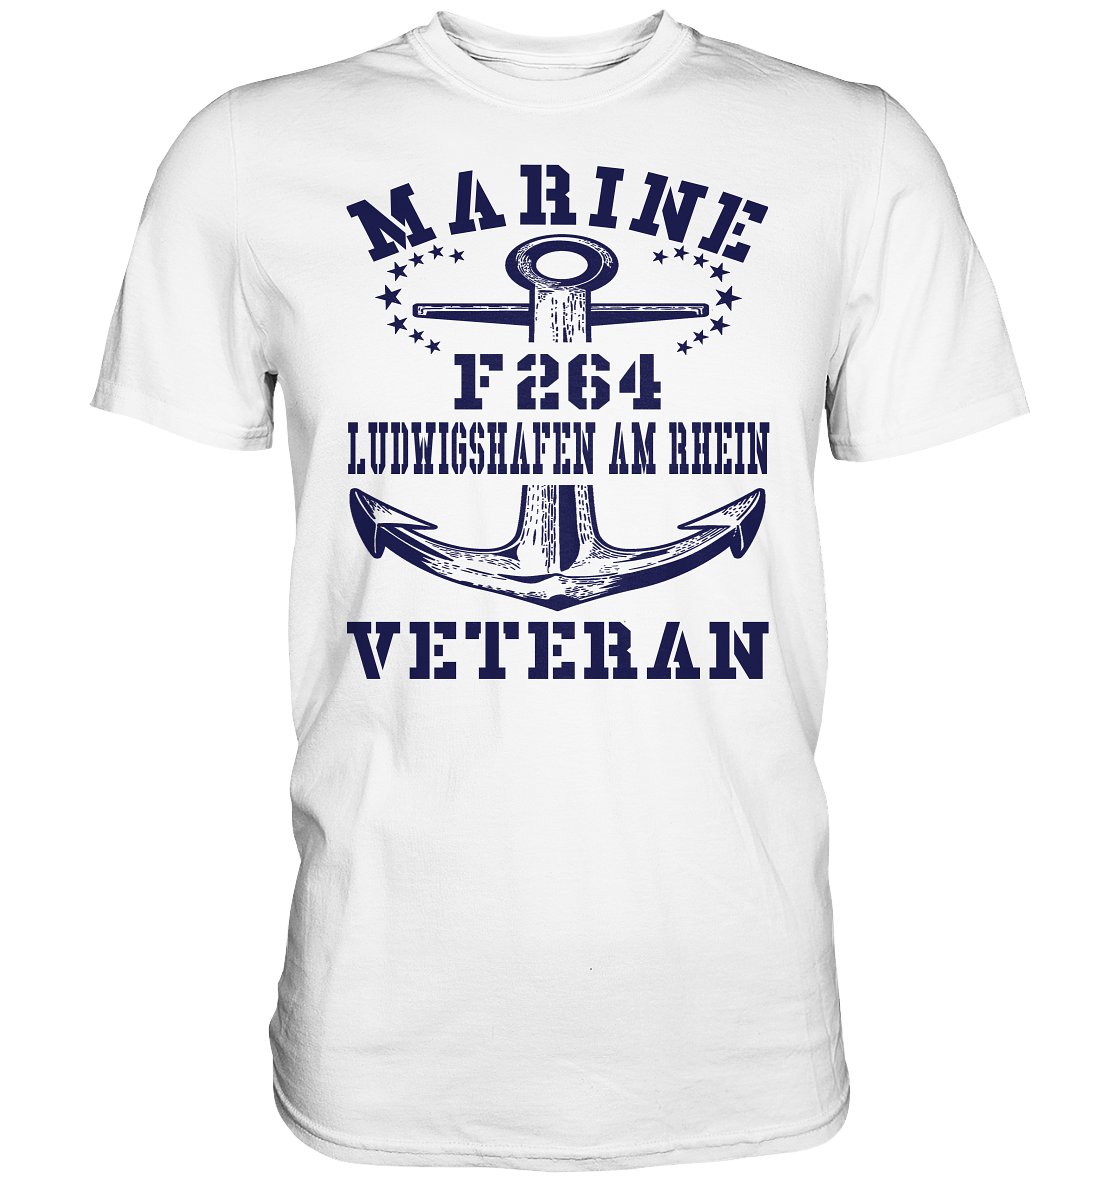 Korvette F264 LUDWIGSHAFEN AM RHEIN Marine Veteran - Premium Shirt